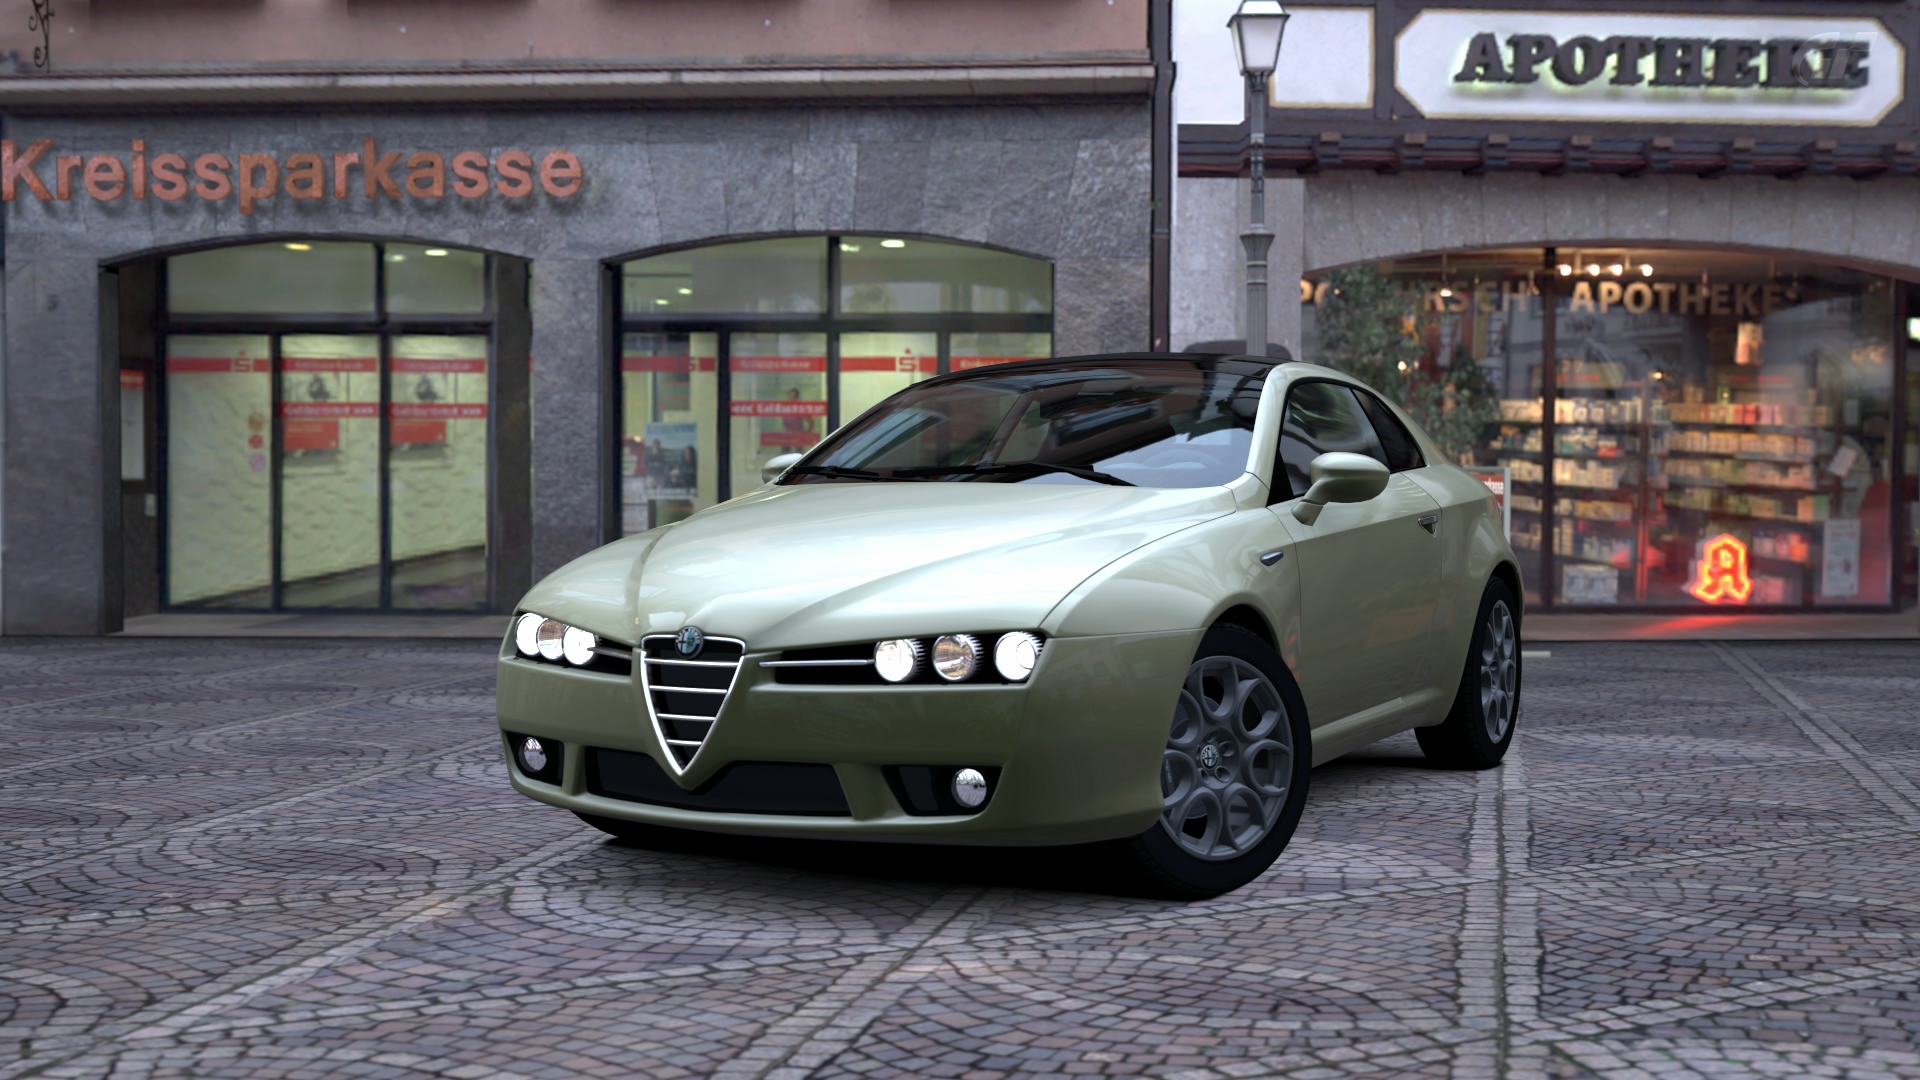 Design of the car Alfa Romeo 169 